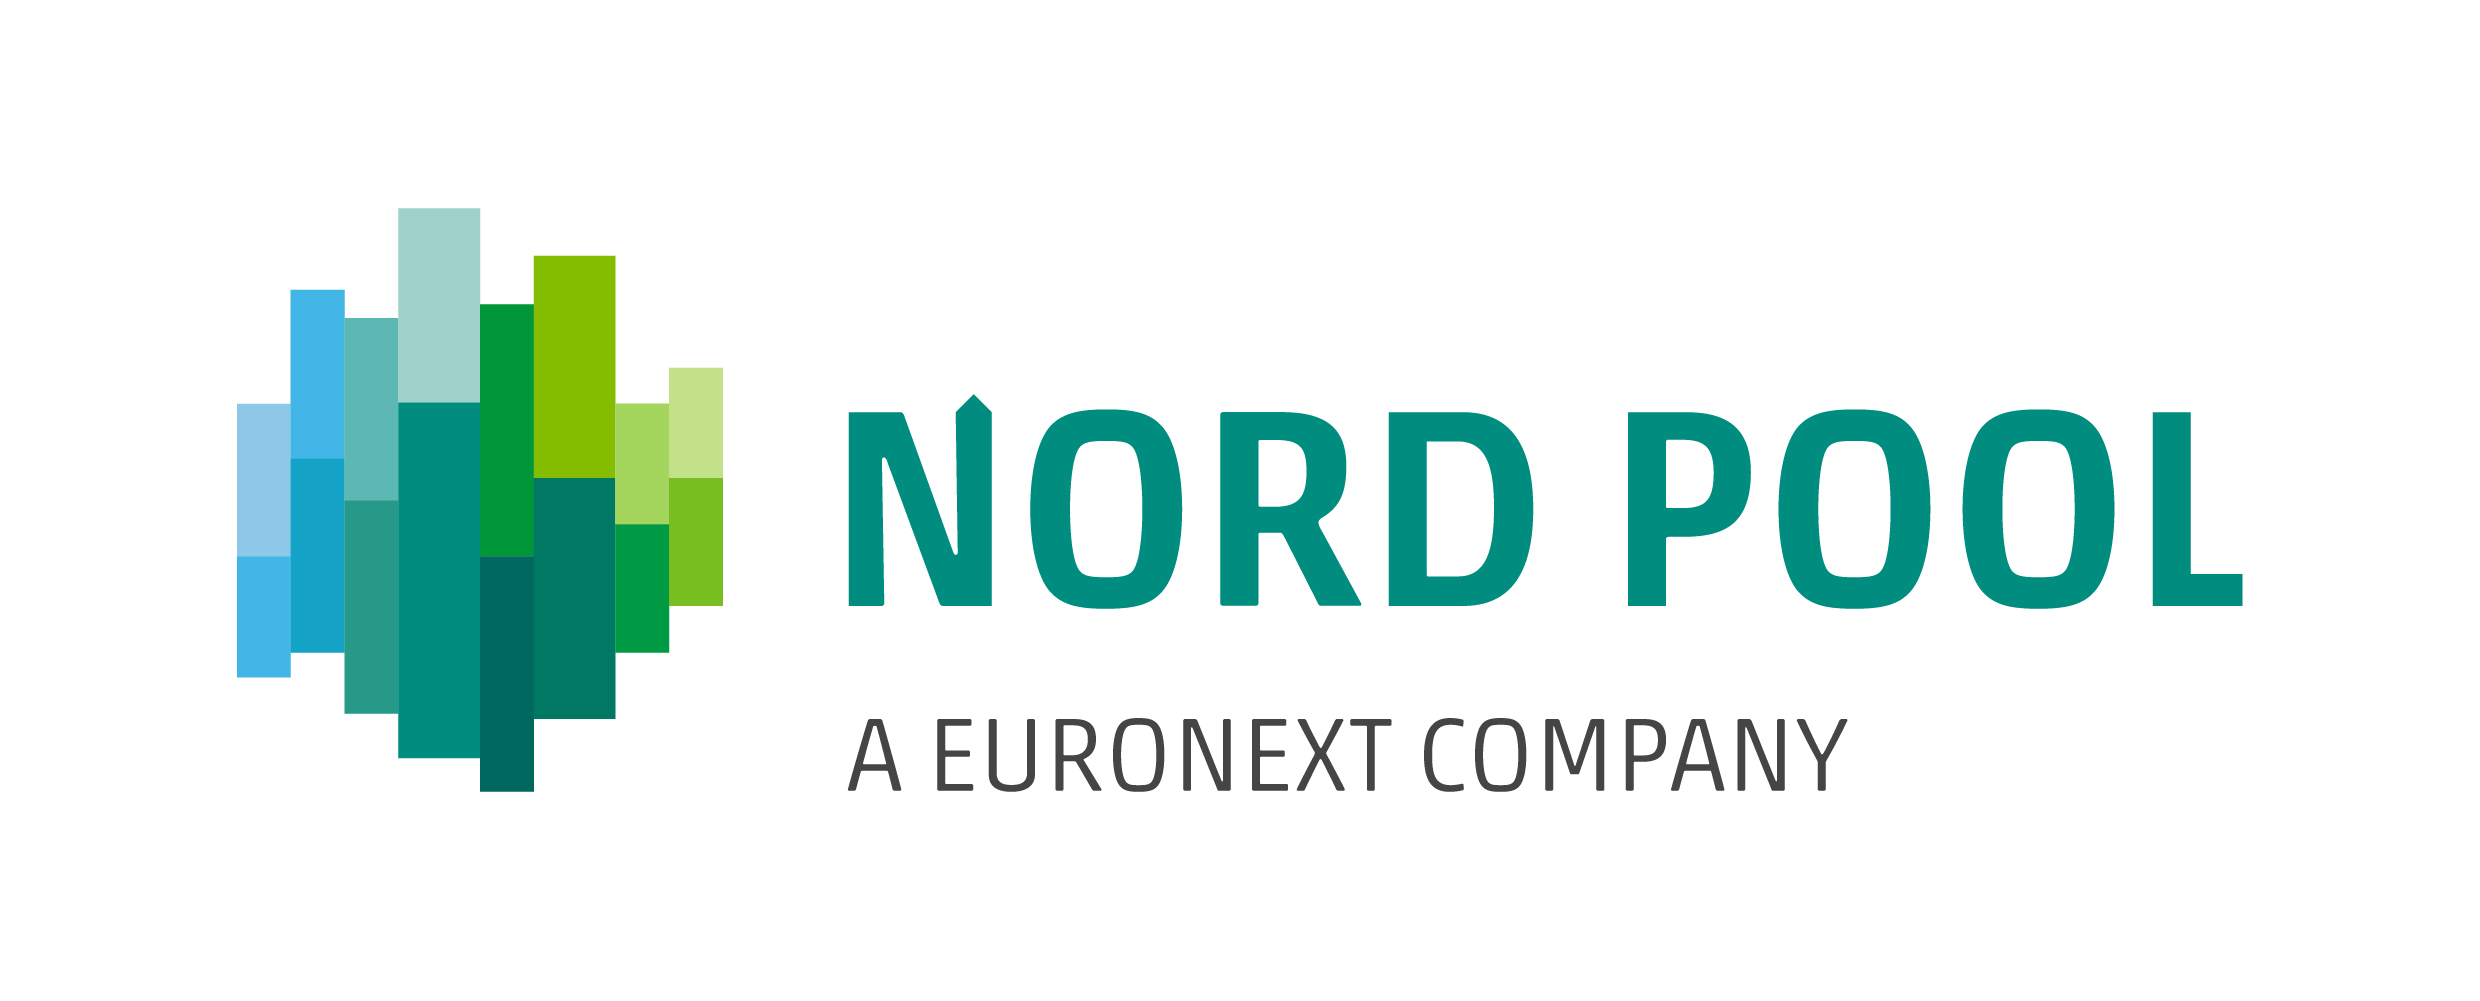 Nord Pool Logo - Colour.jpg